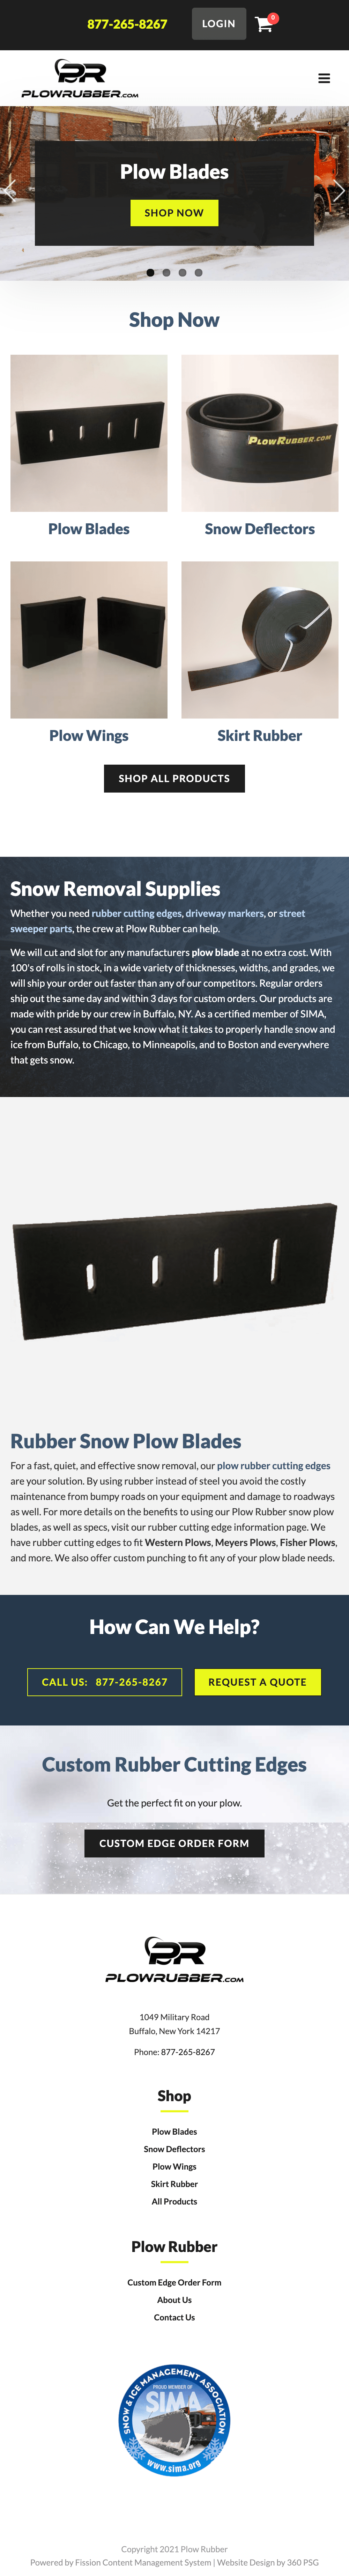 Plow Rubber Website - Mobile